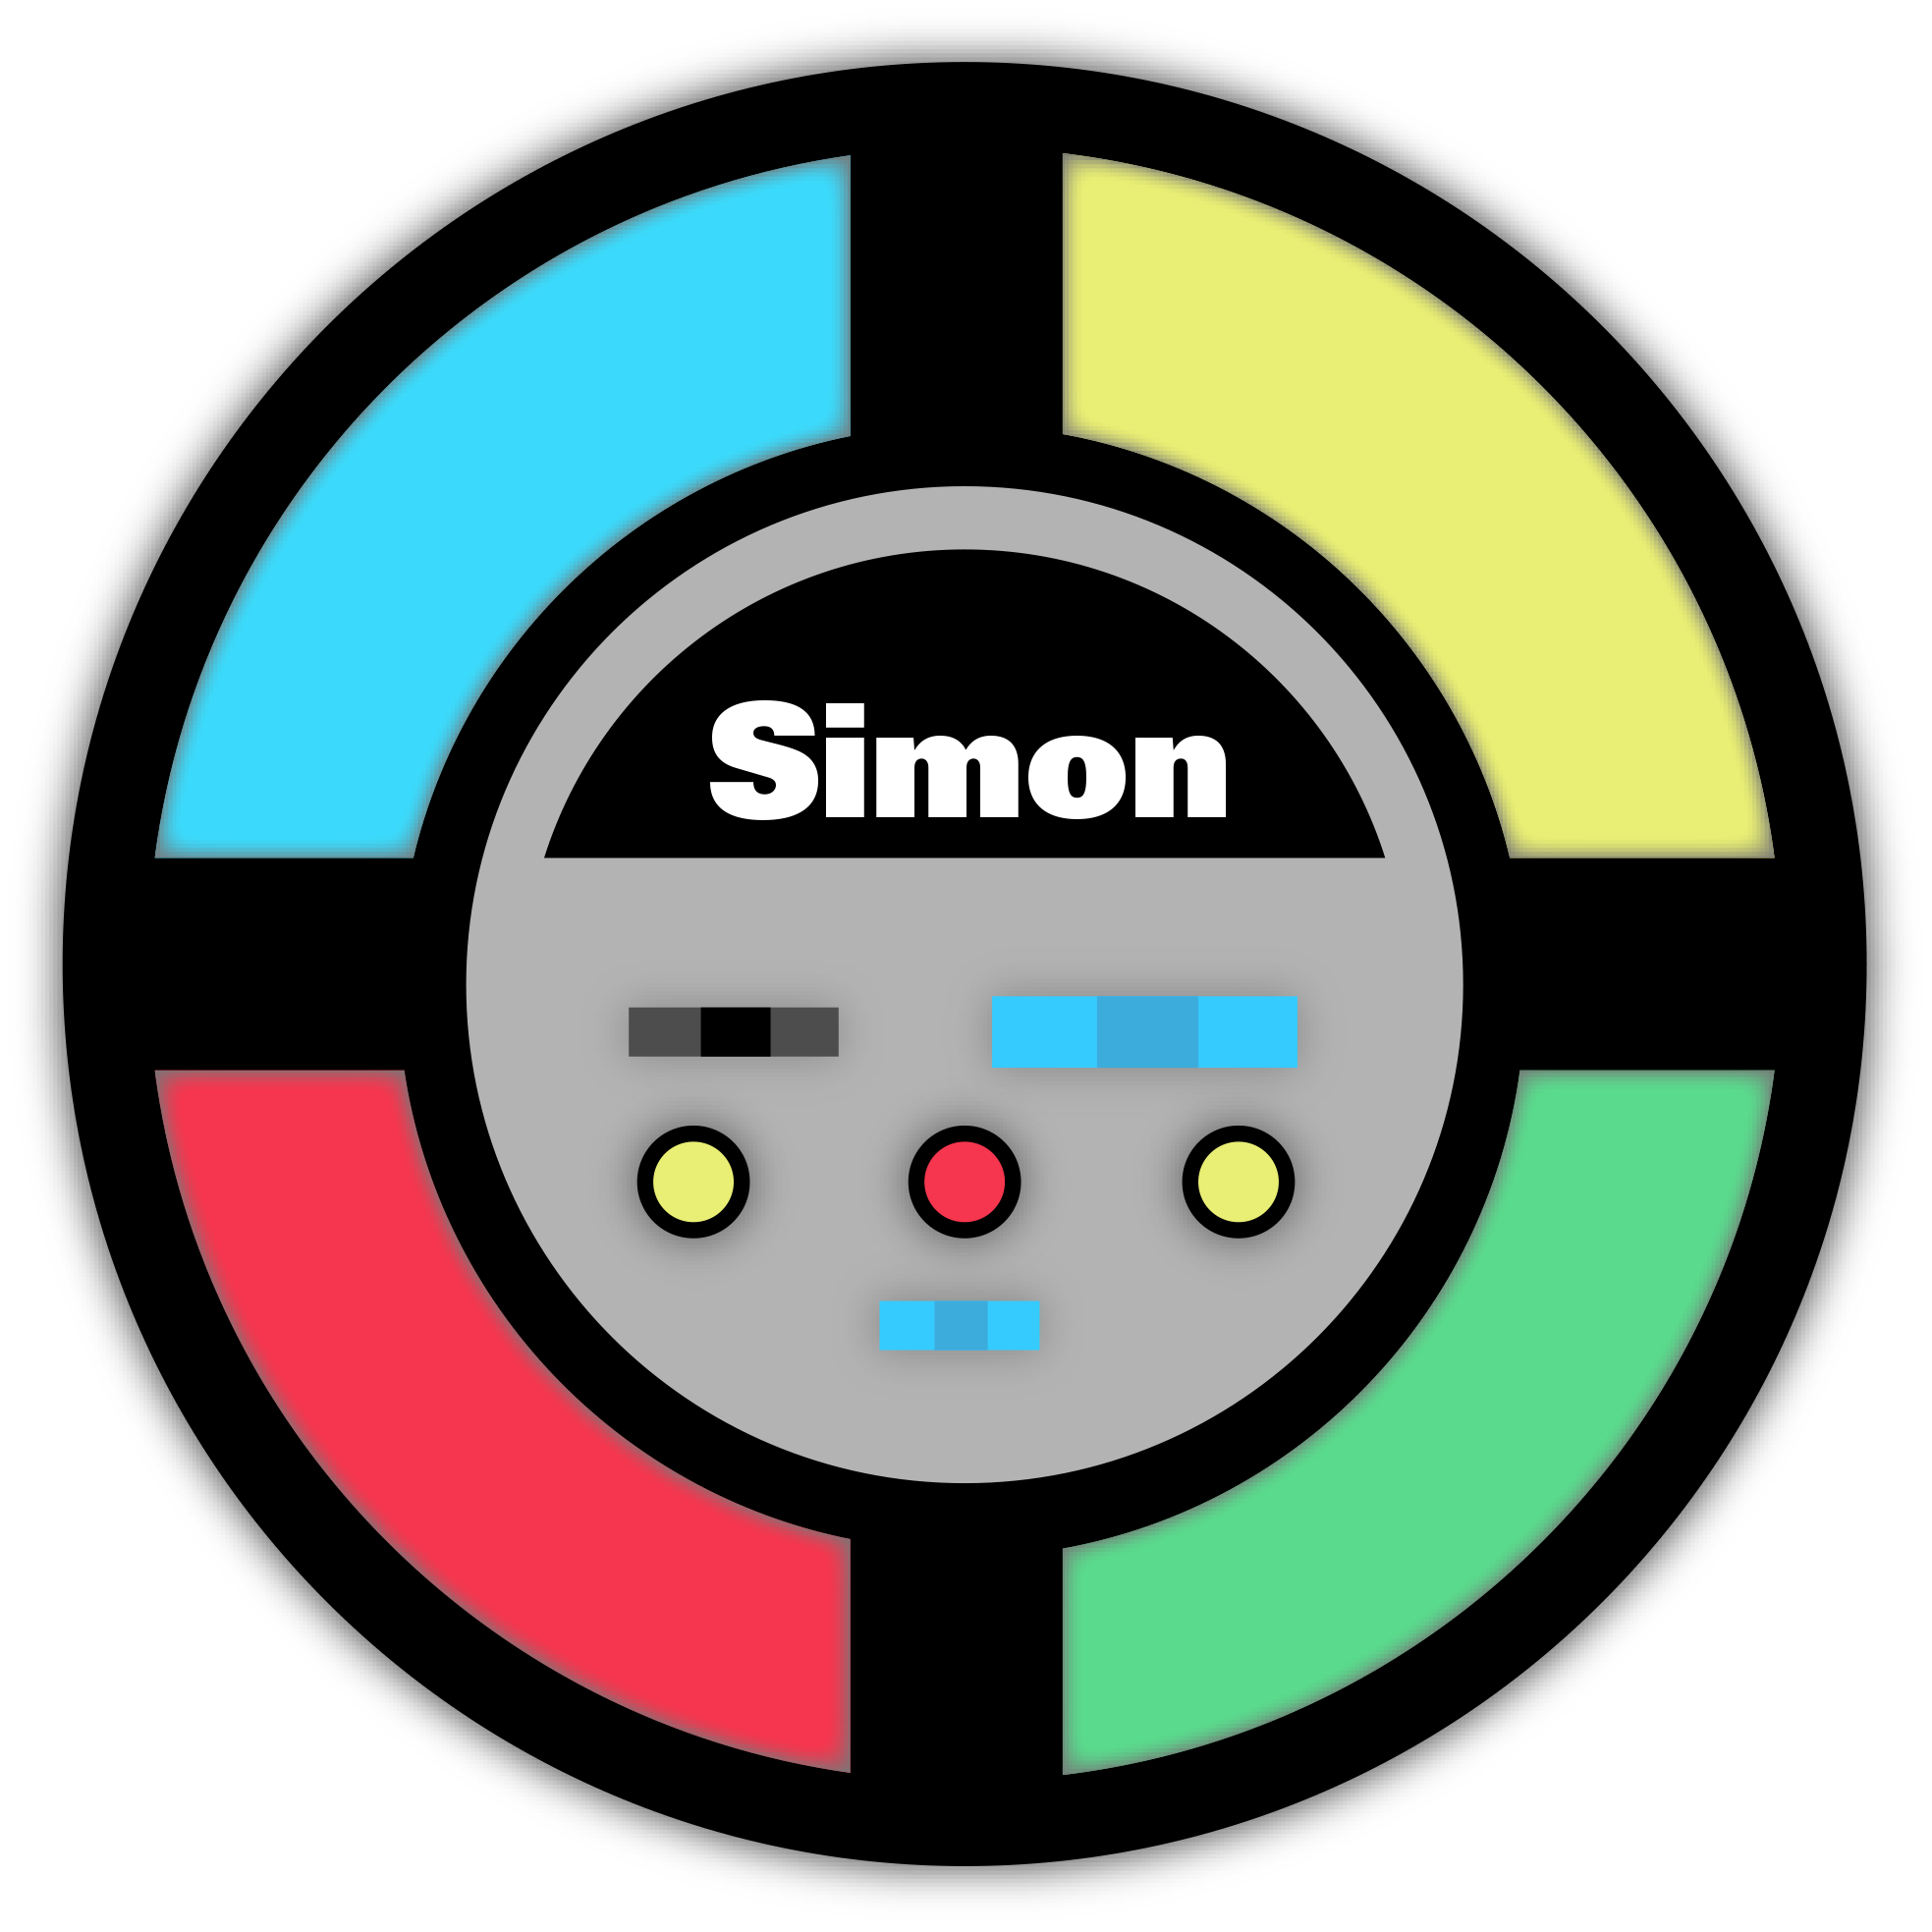 Does Simon game end?